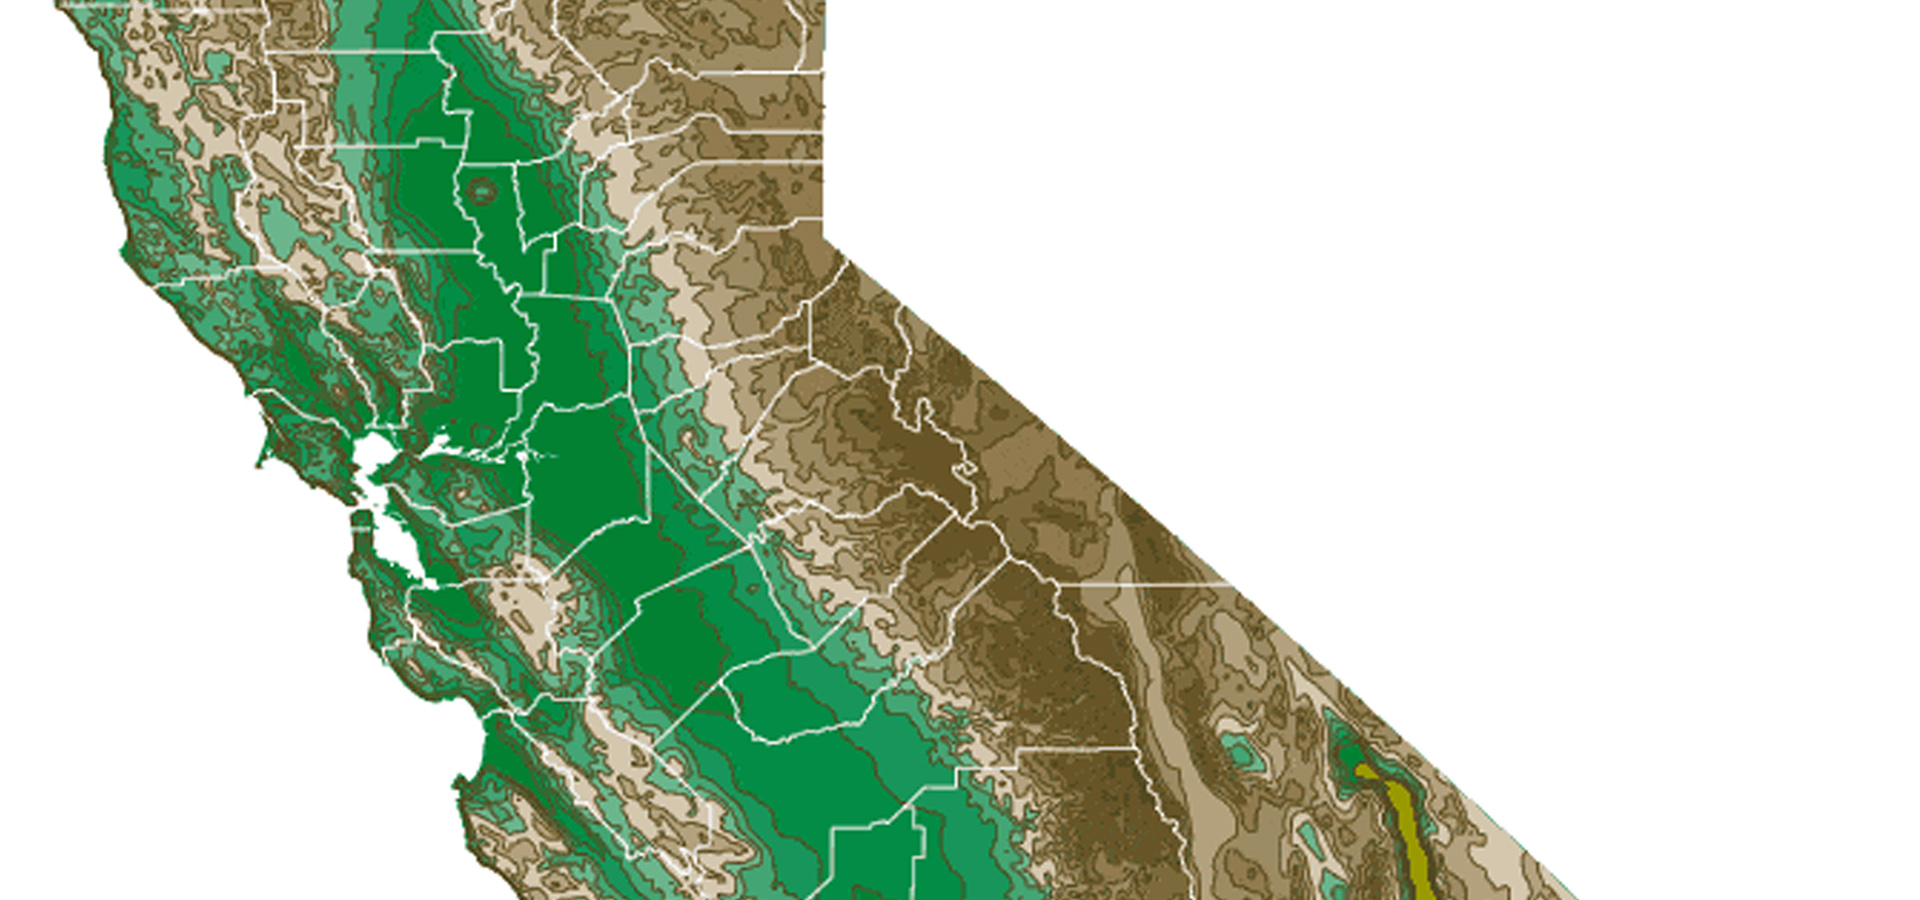 Map of San Francisco Bay Area